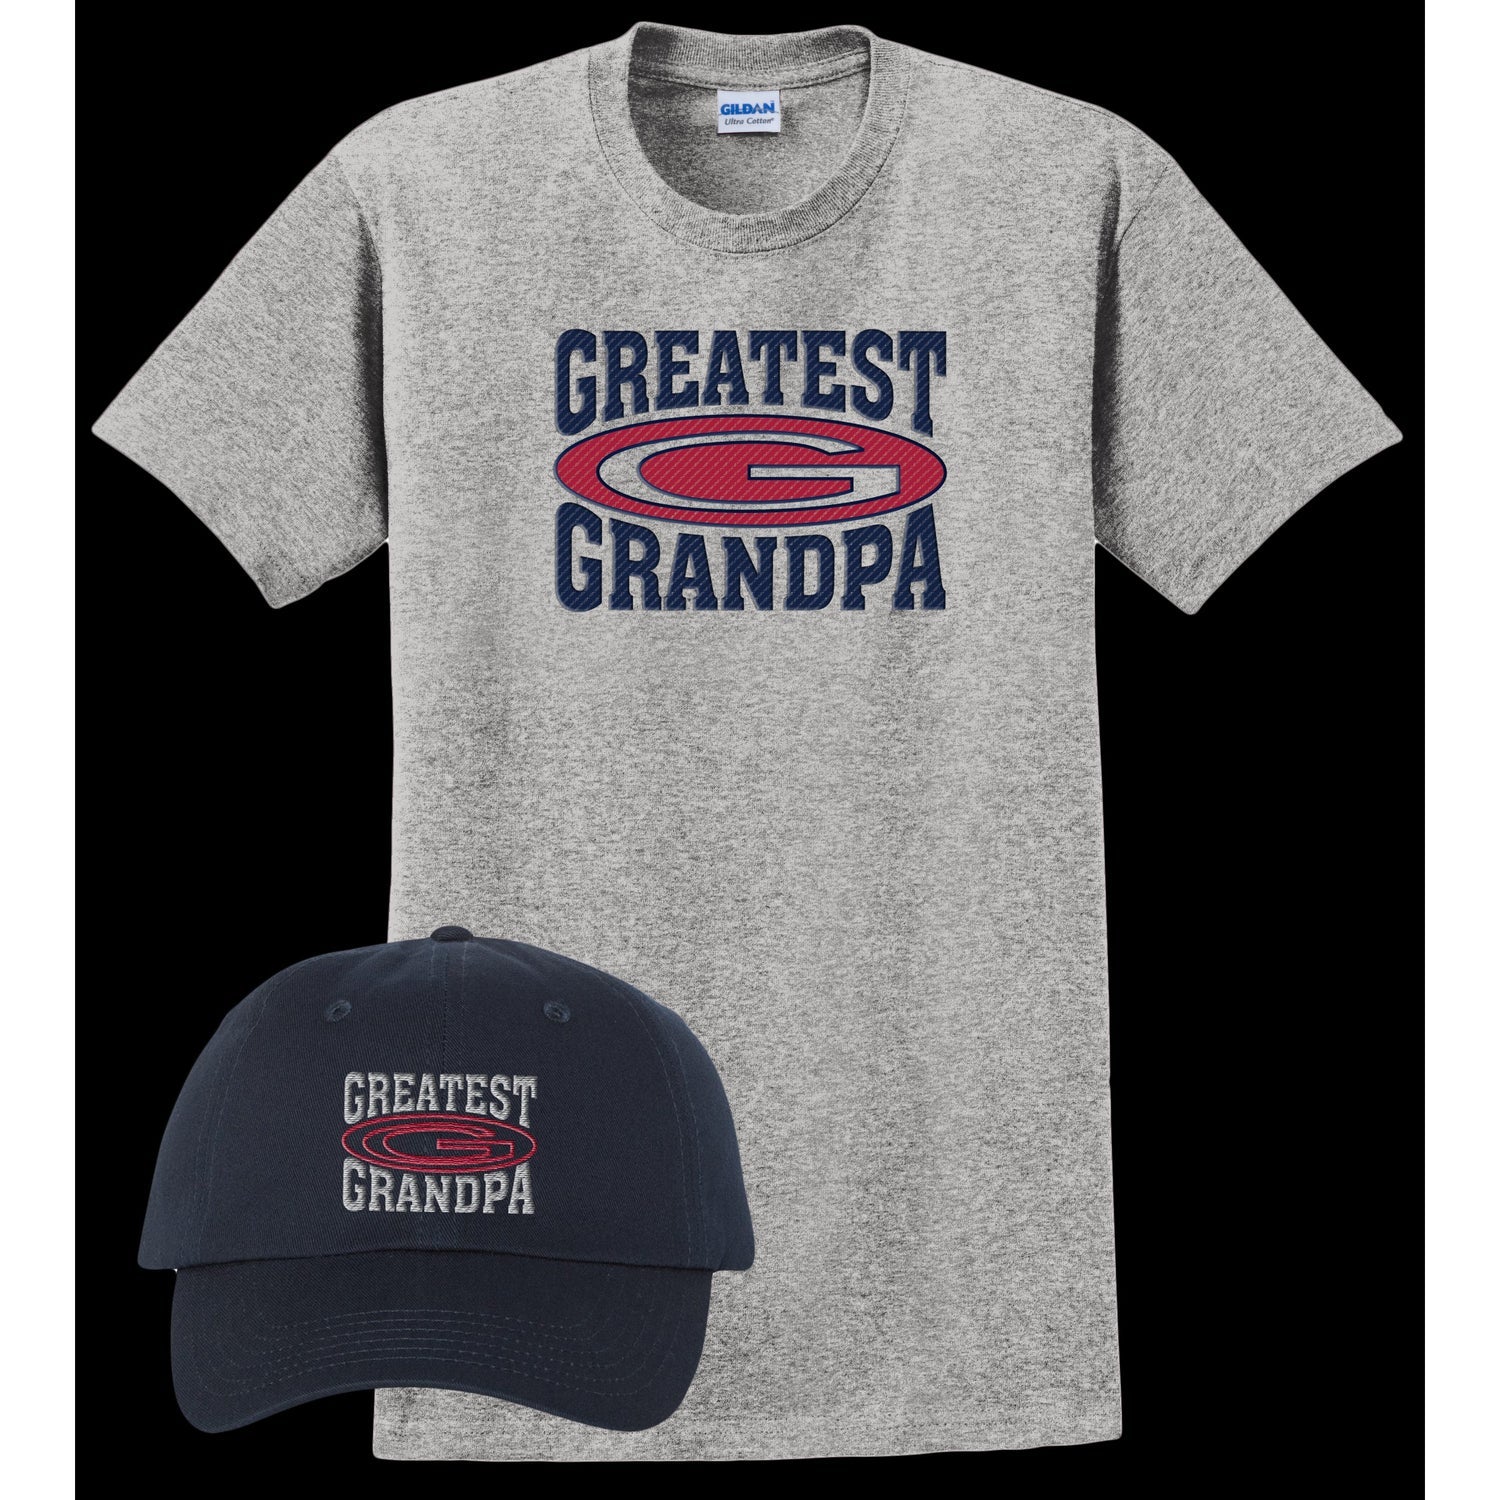 Greatest Grandpa Light Steel Tee and Hat